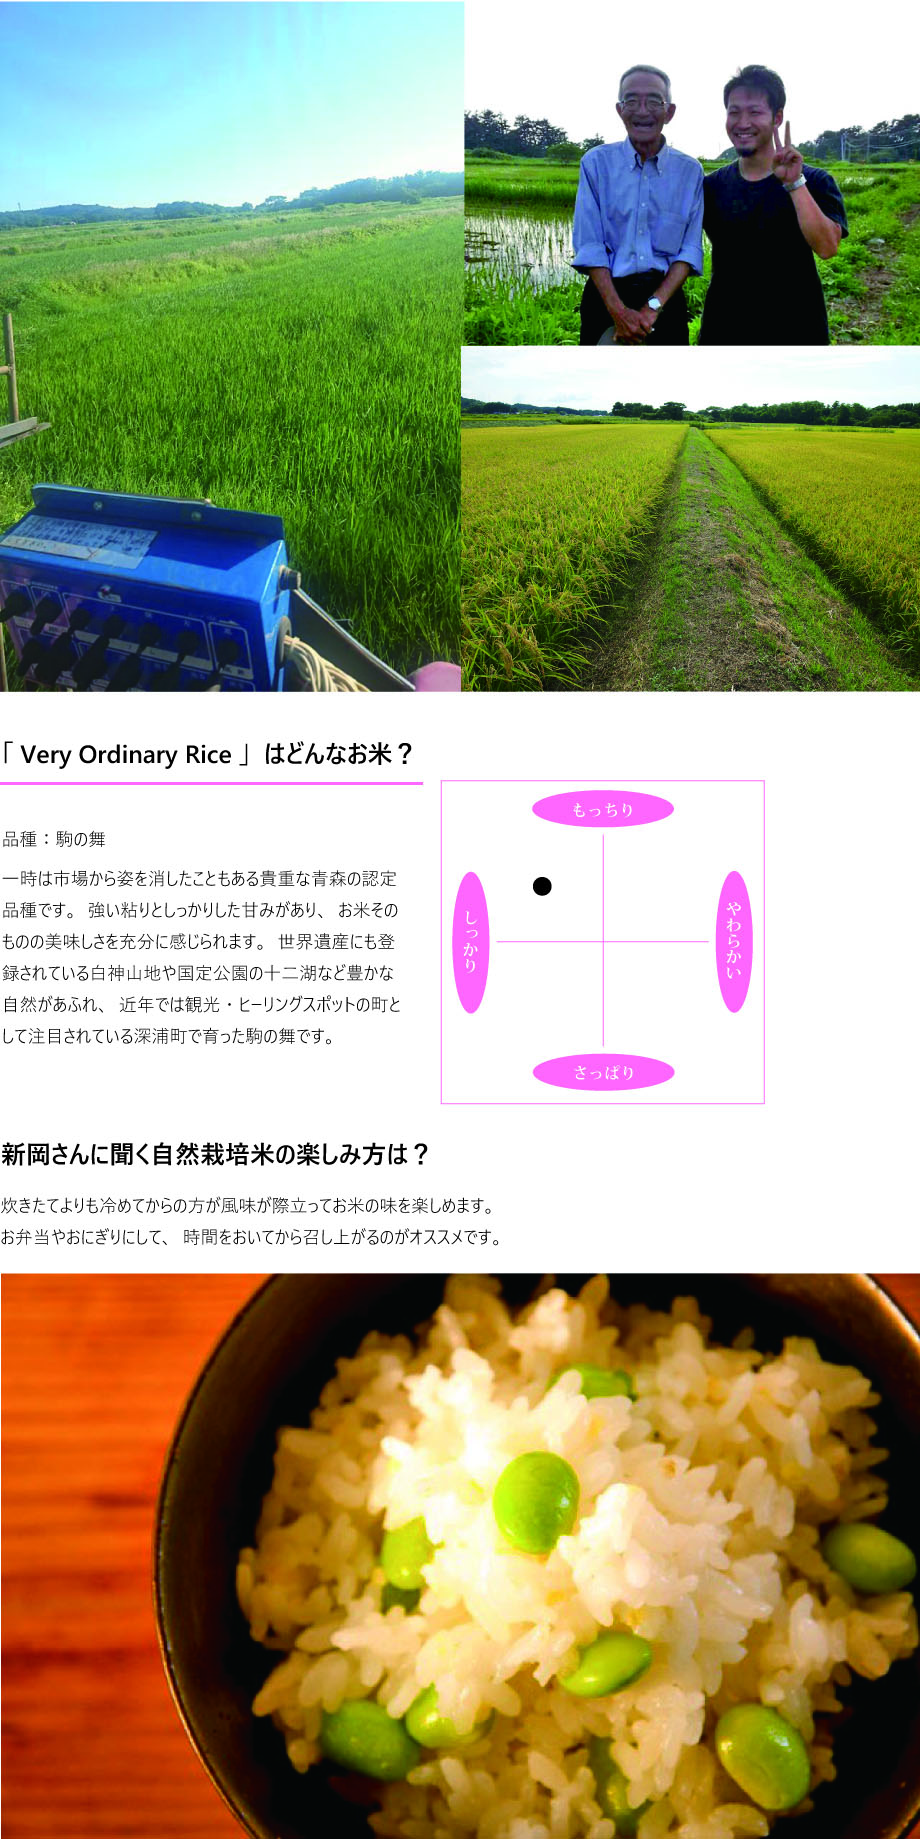 (R03産)Very Ordinary Rice玄米10kg